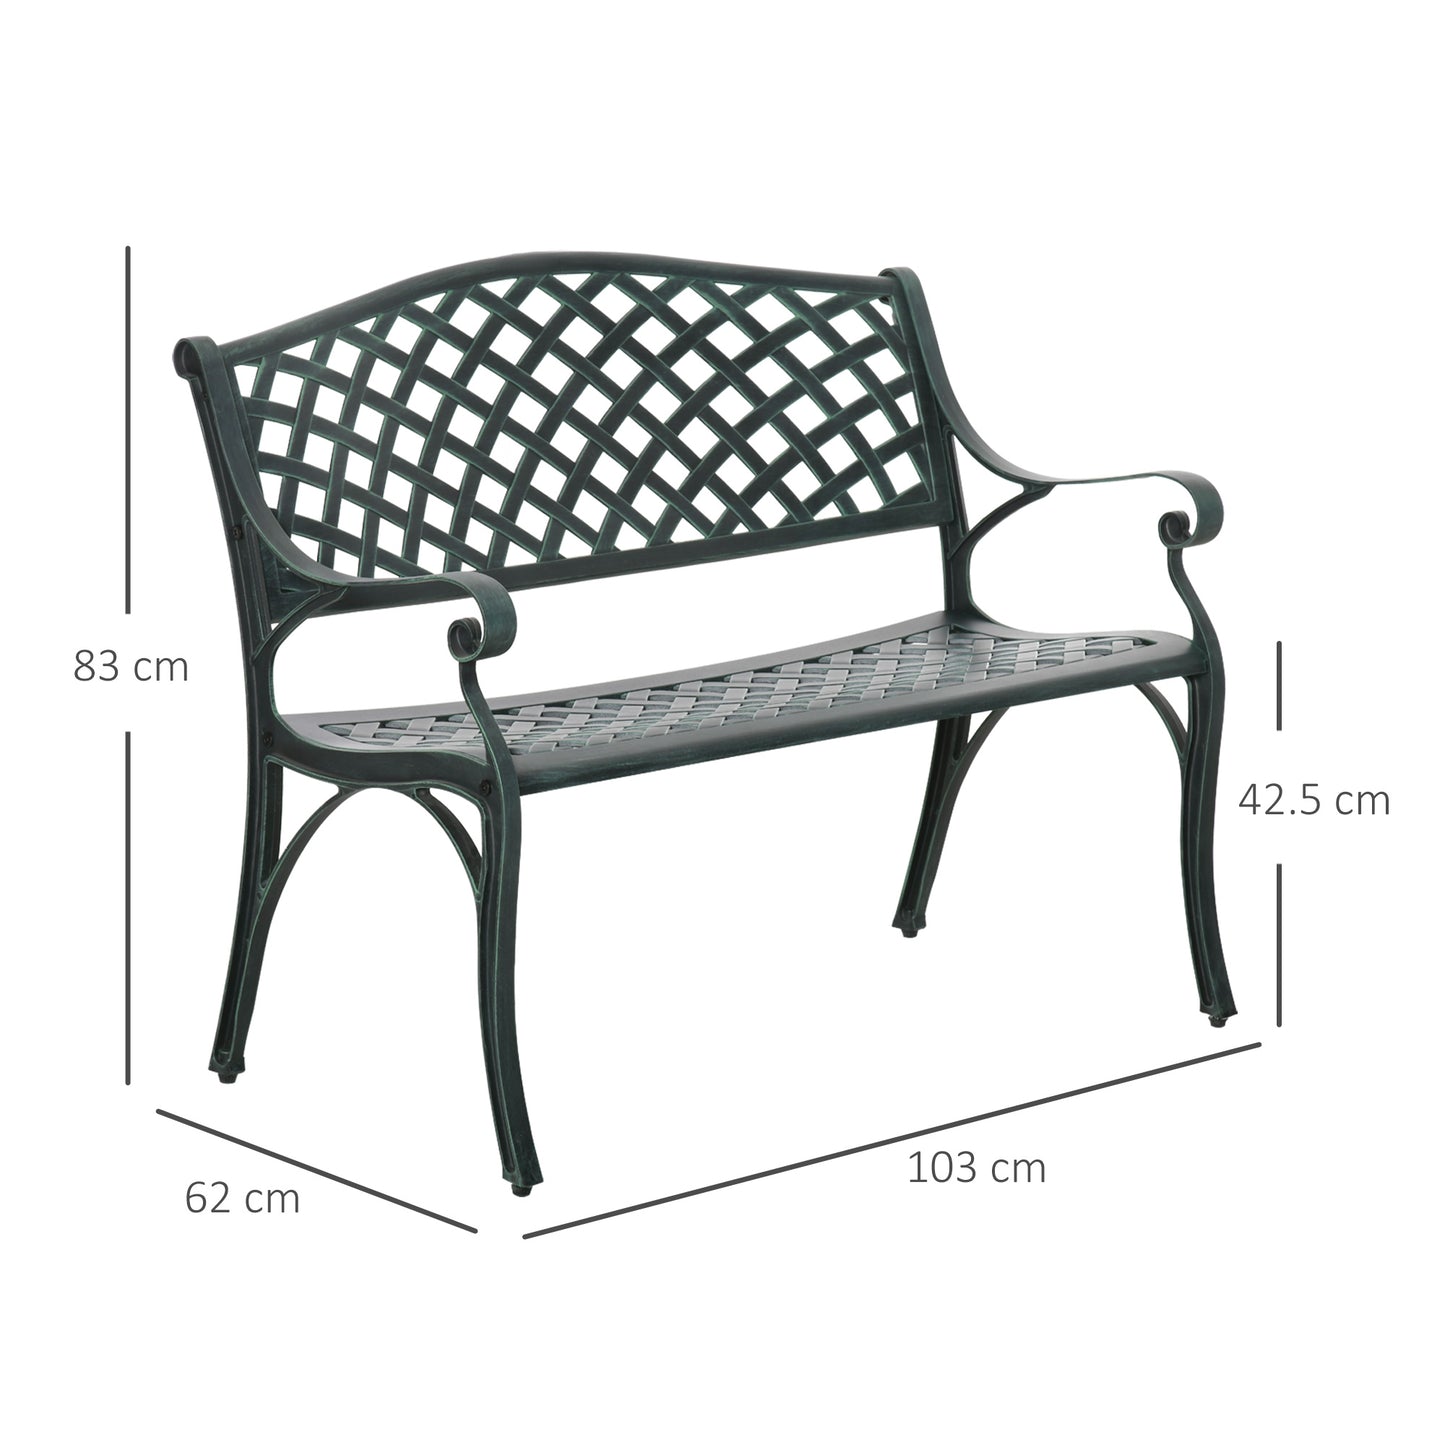 Outsunny Cast Aluminium Garden Bench 2 Seater Antique Loveseat for Outdoor Patio Porch Park, Verdigris